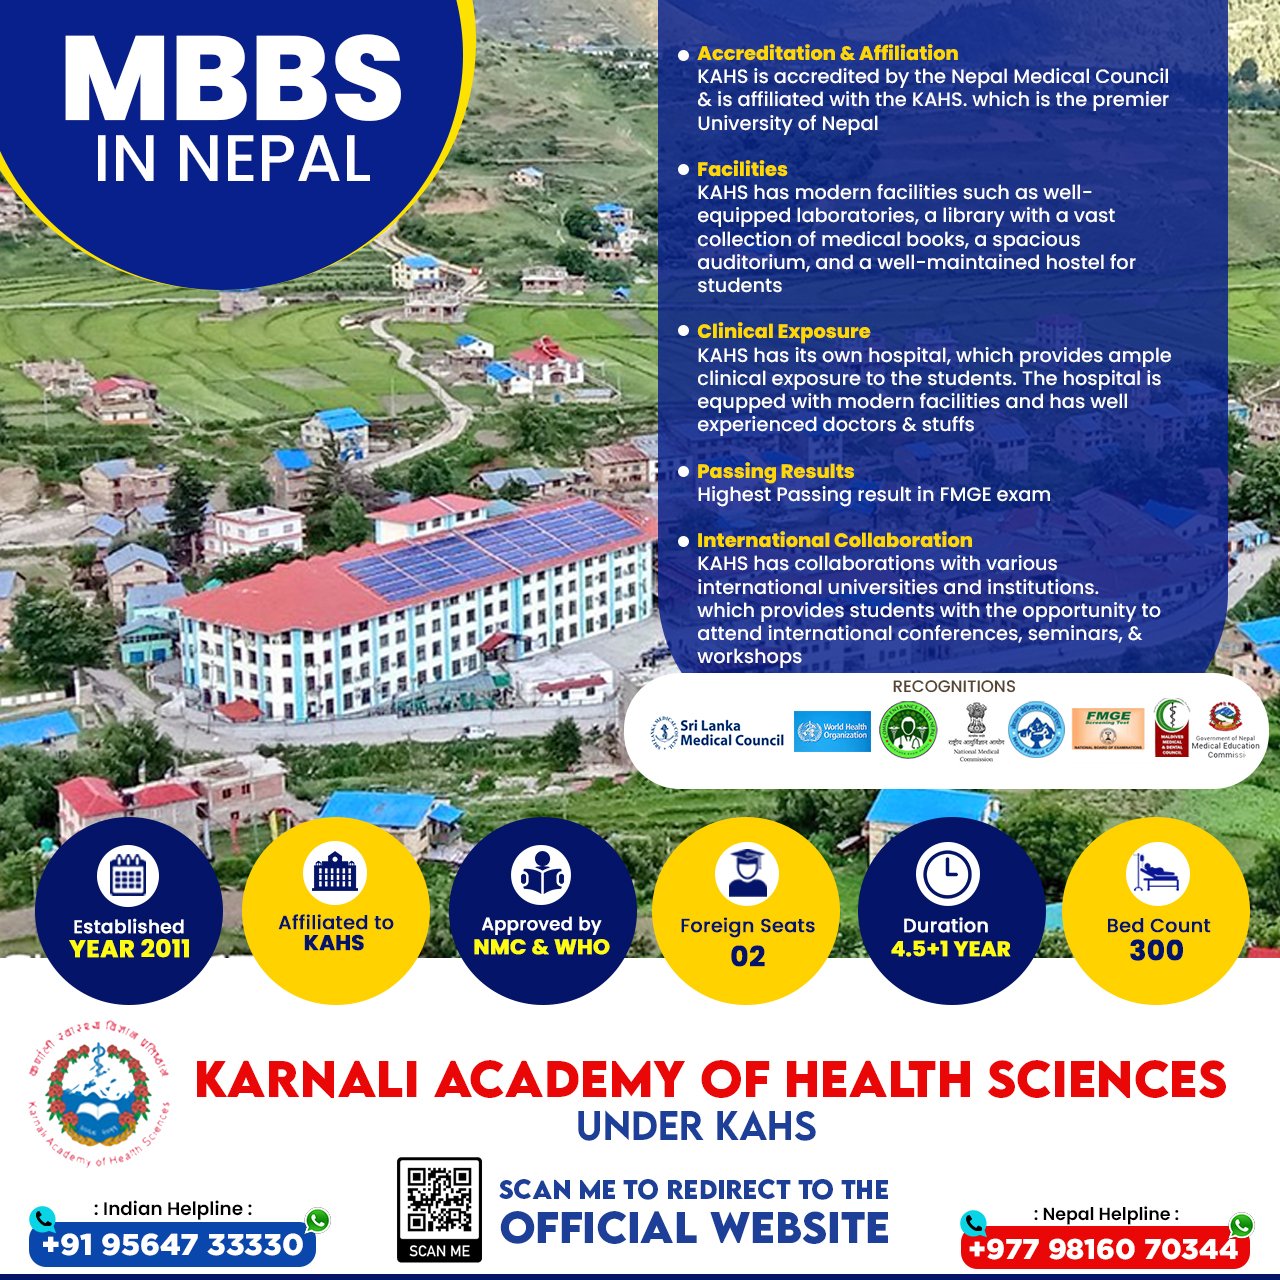 mbbs-in-nepal-at-karnali-academy-of-health-sciences-under-kahs